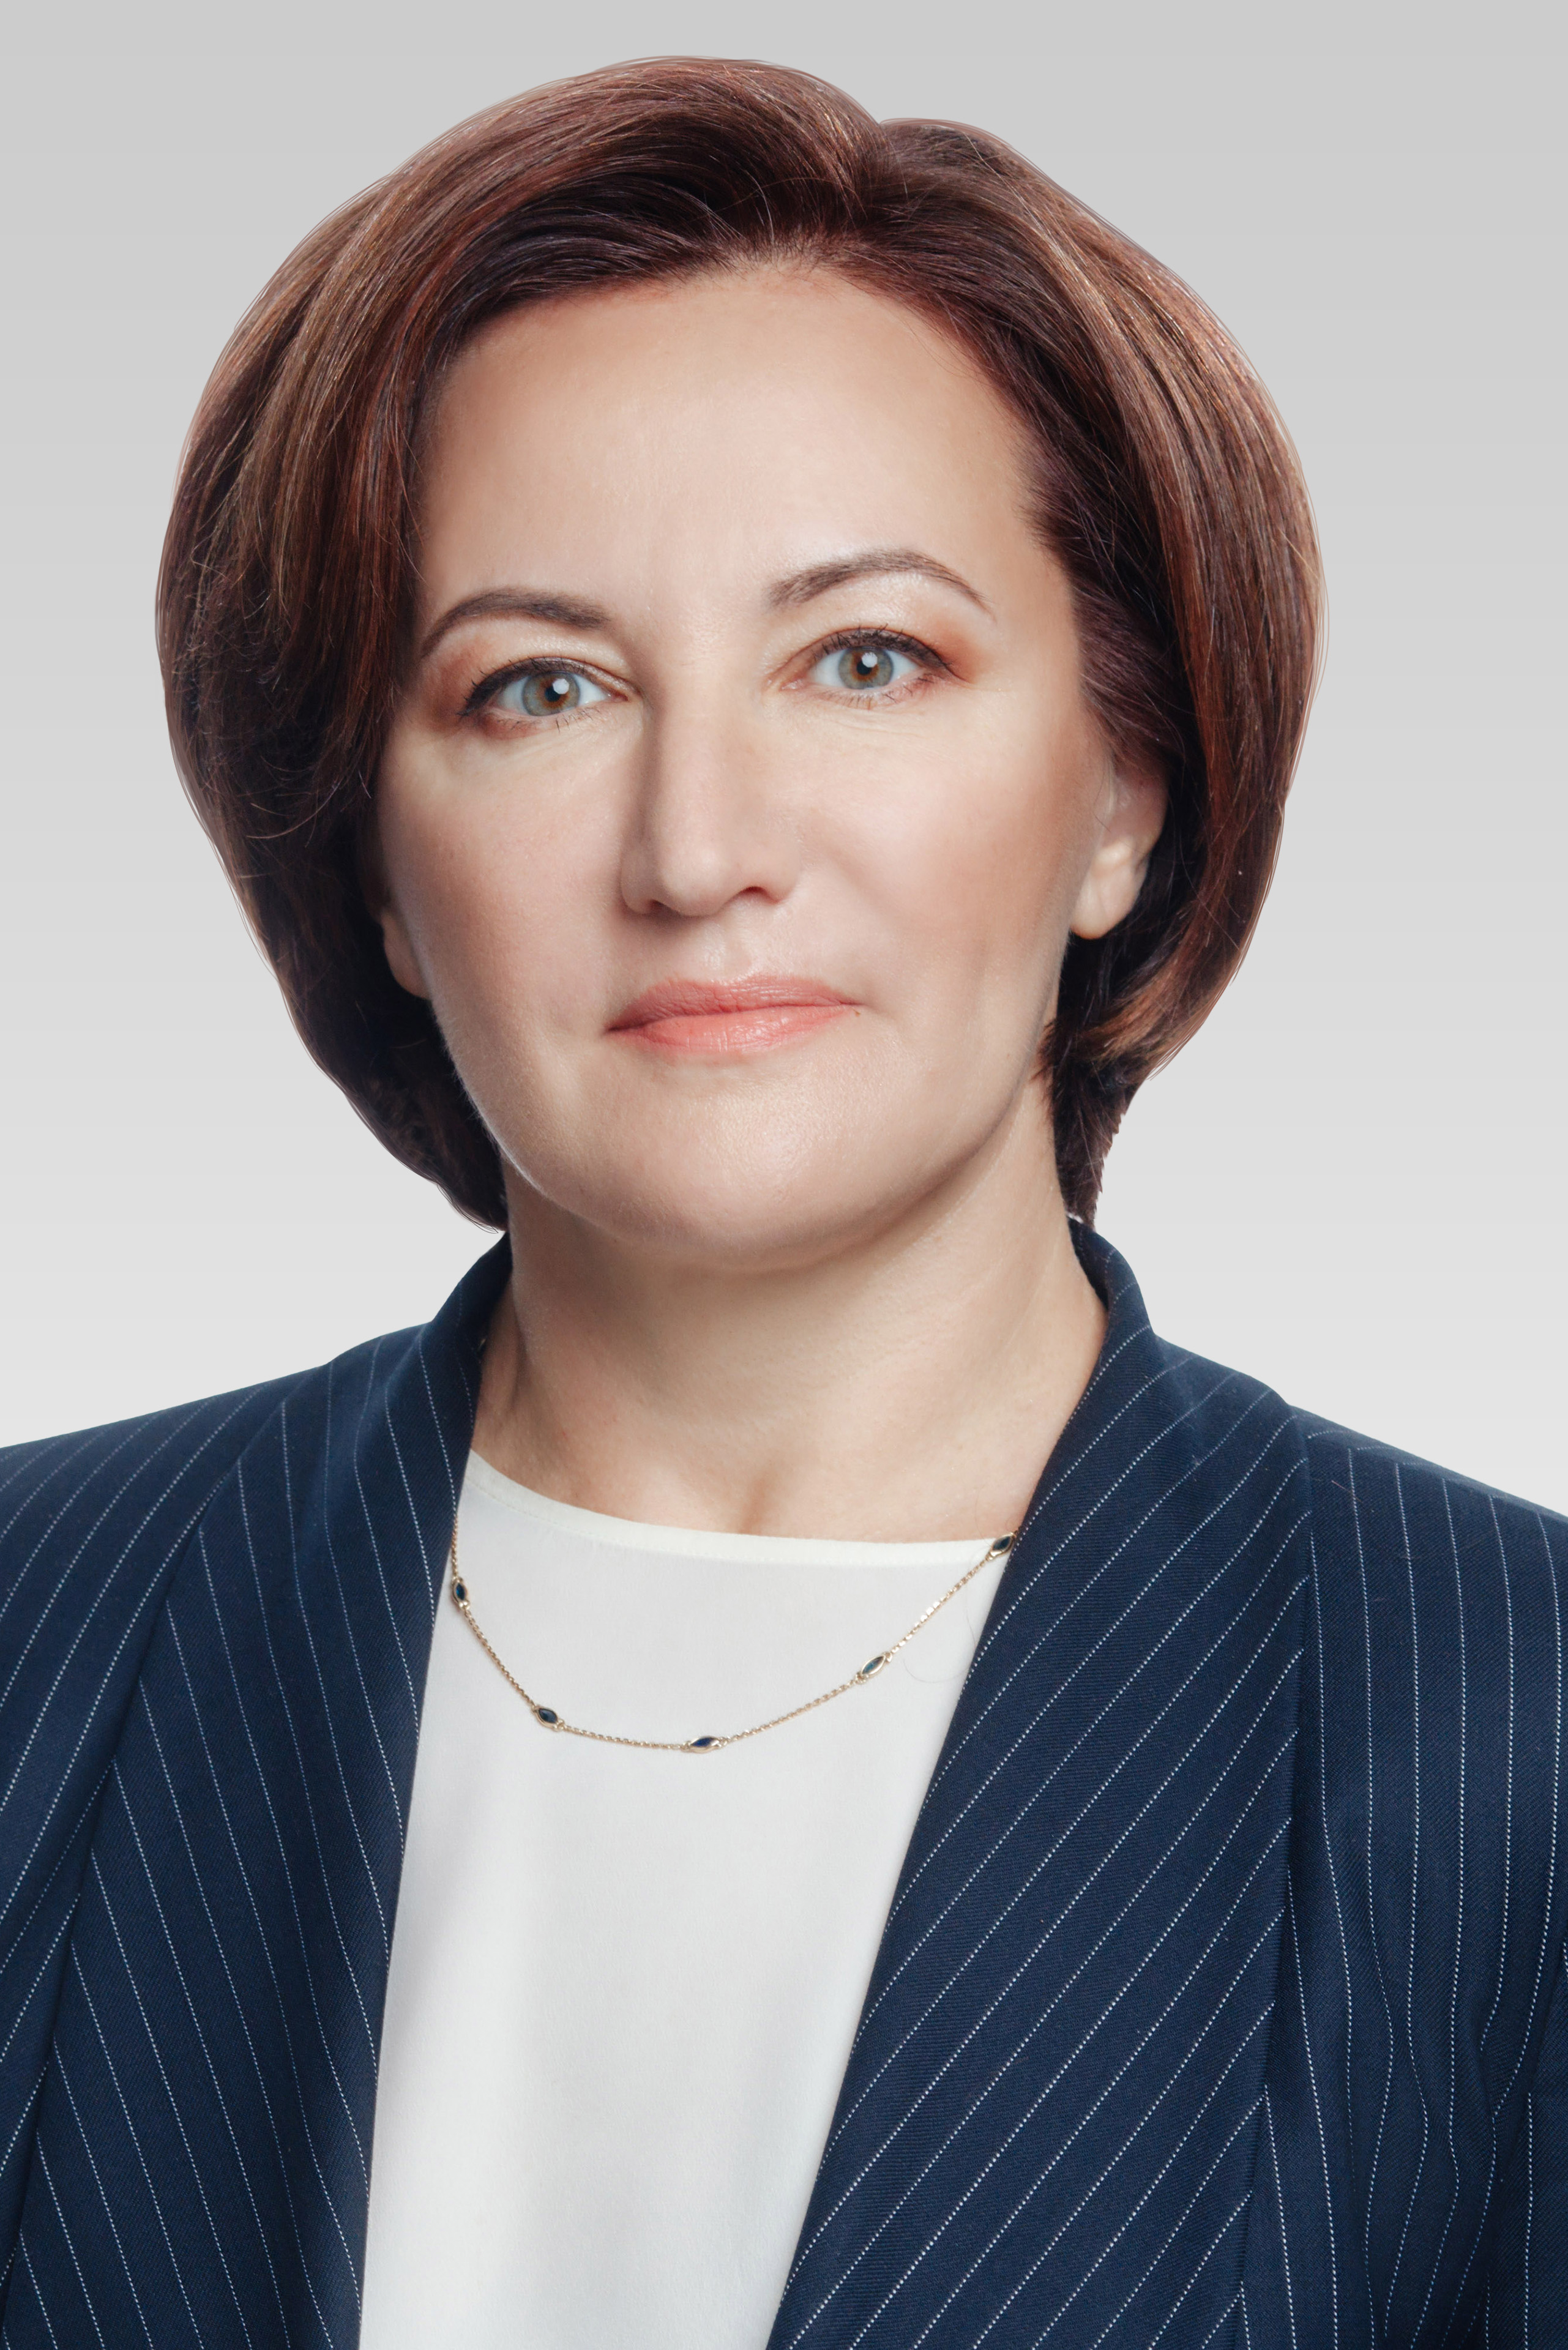 Полякова Ольга Васильевна